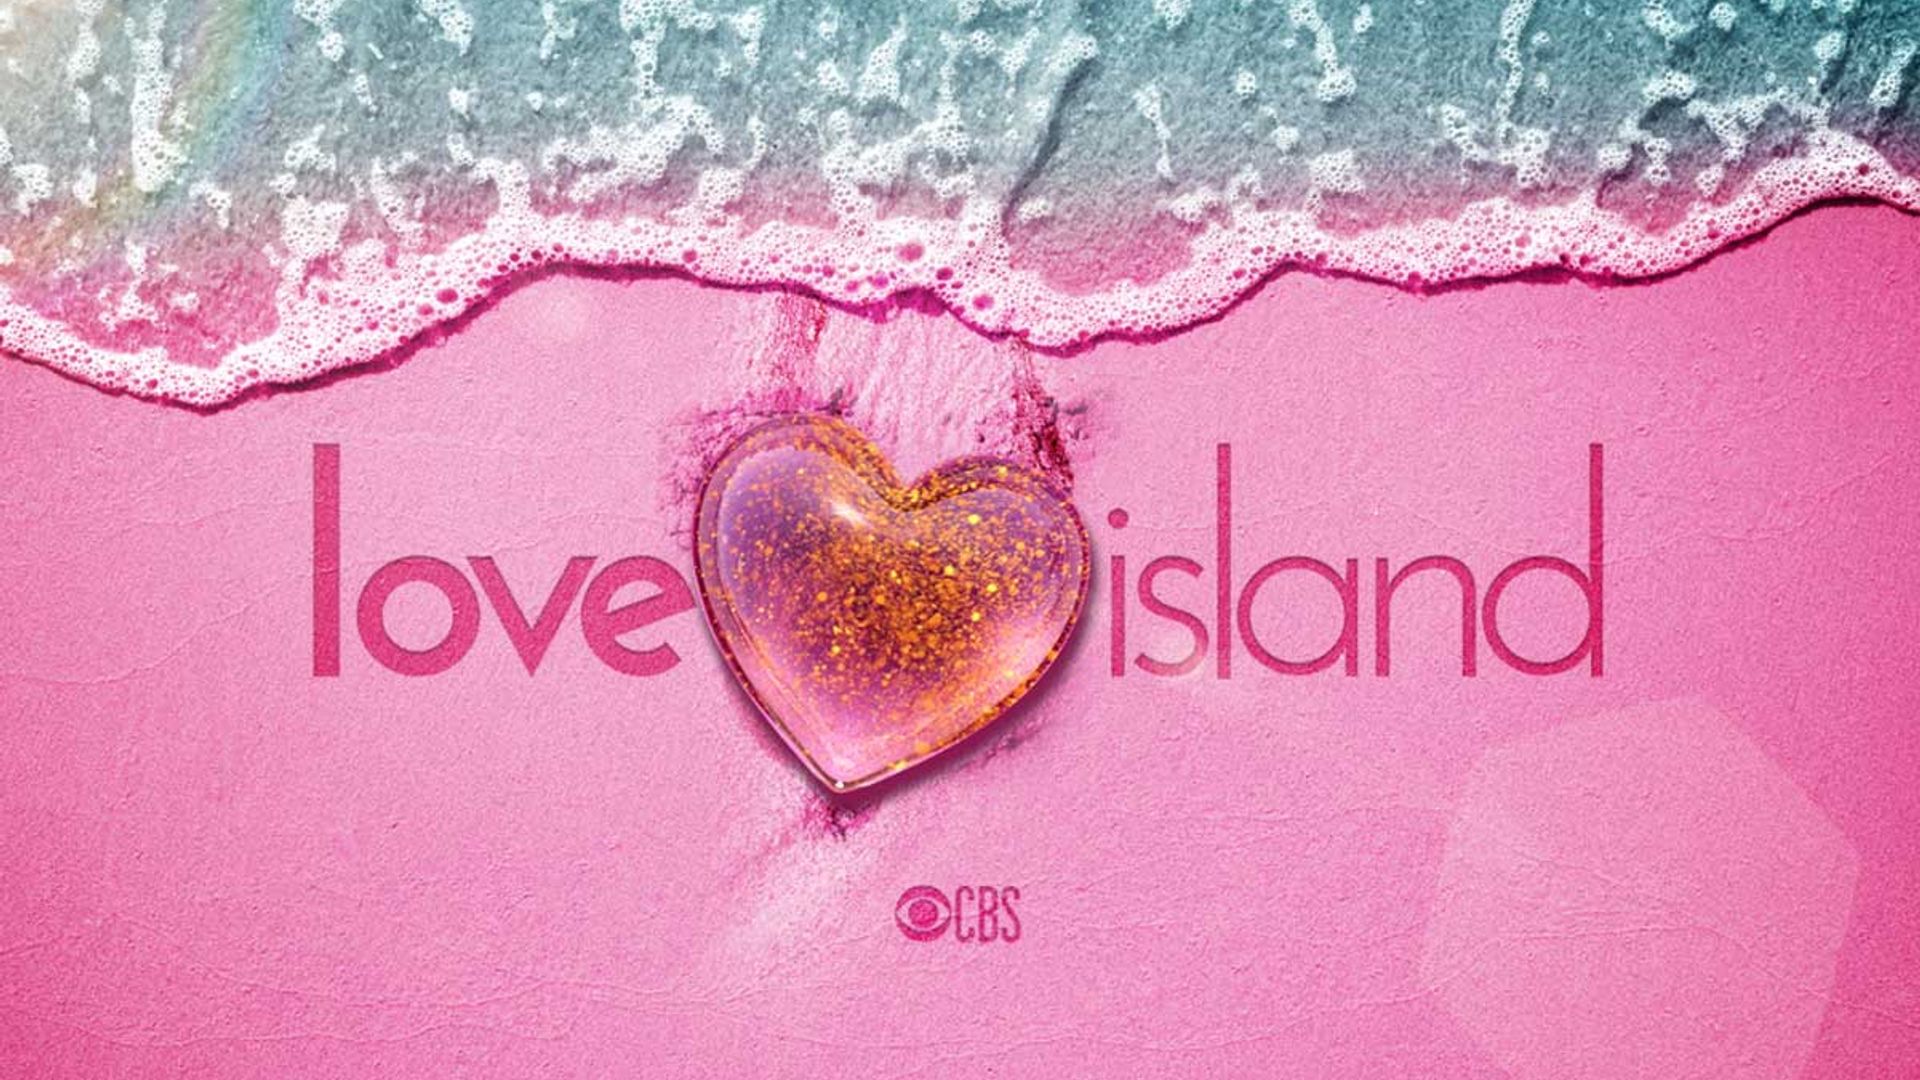 love island cbs